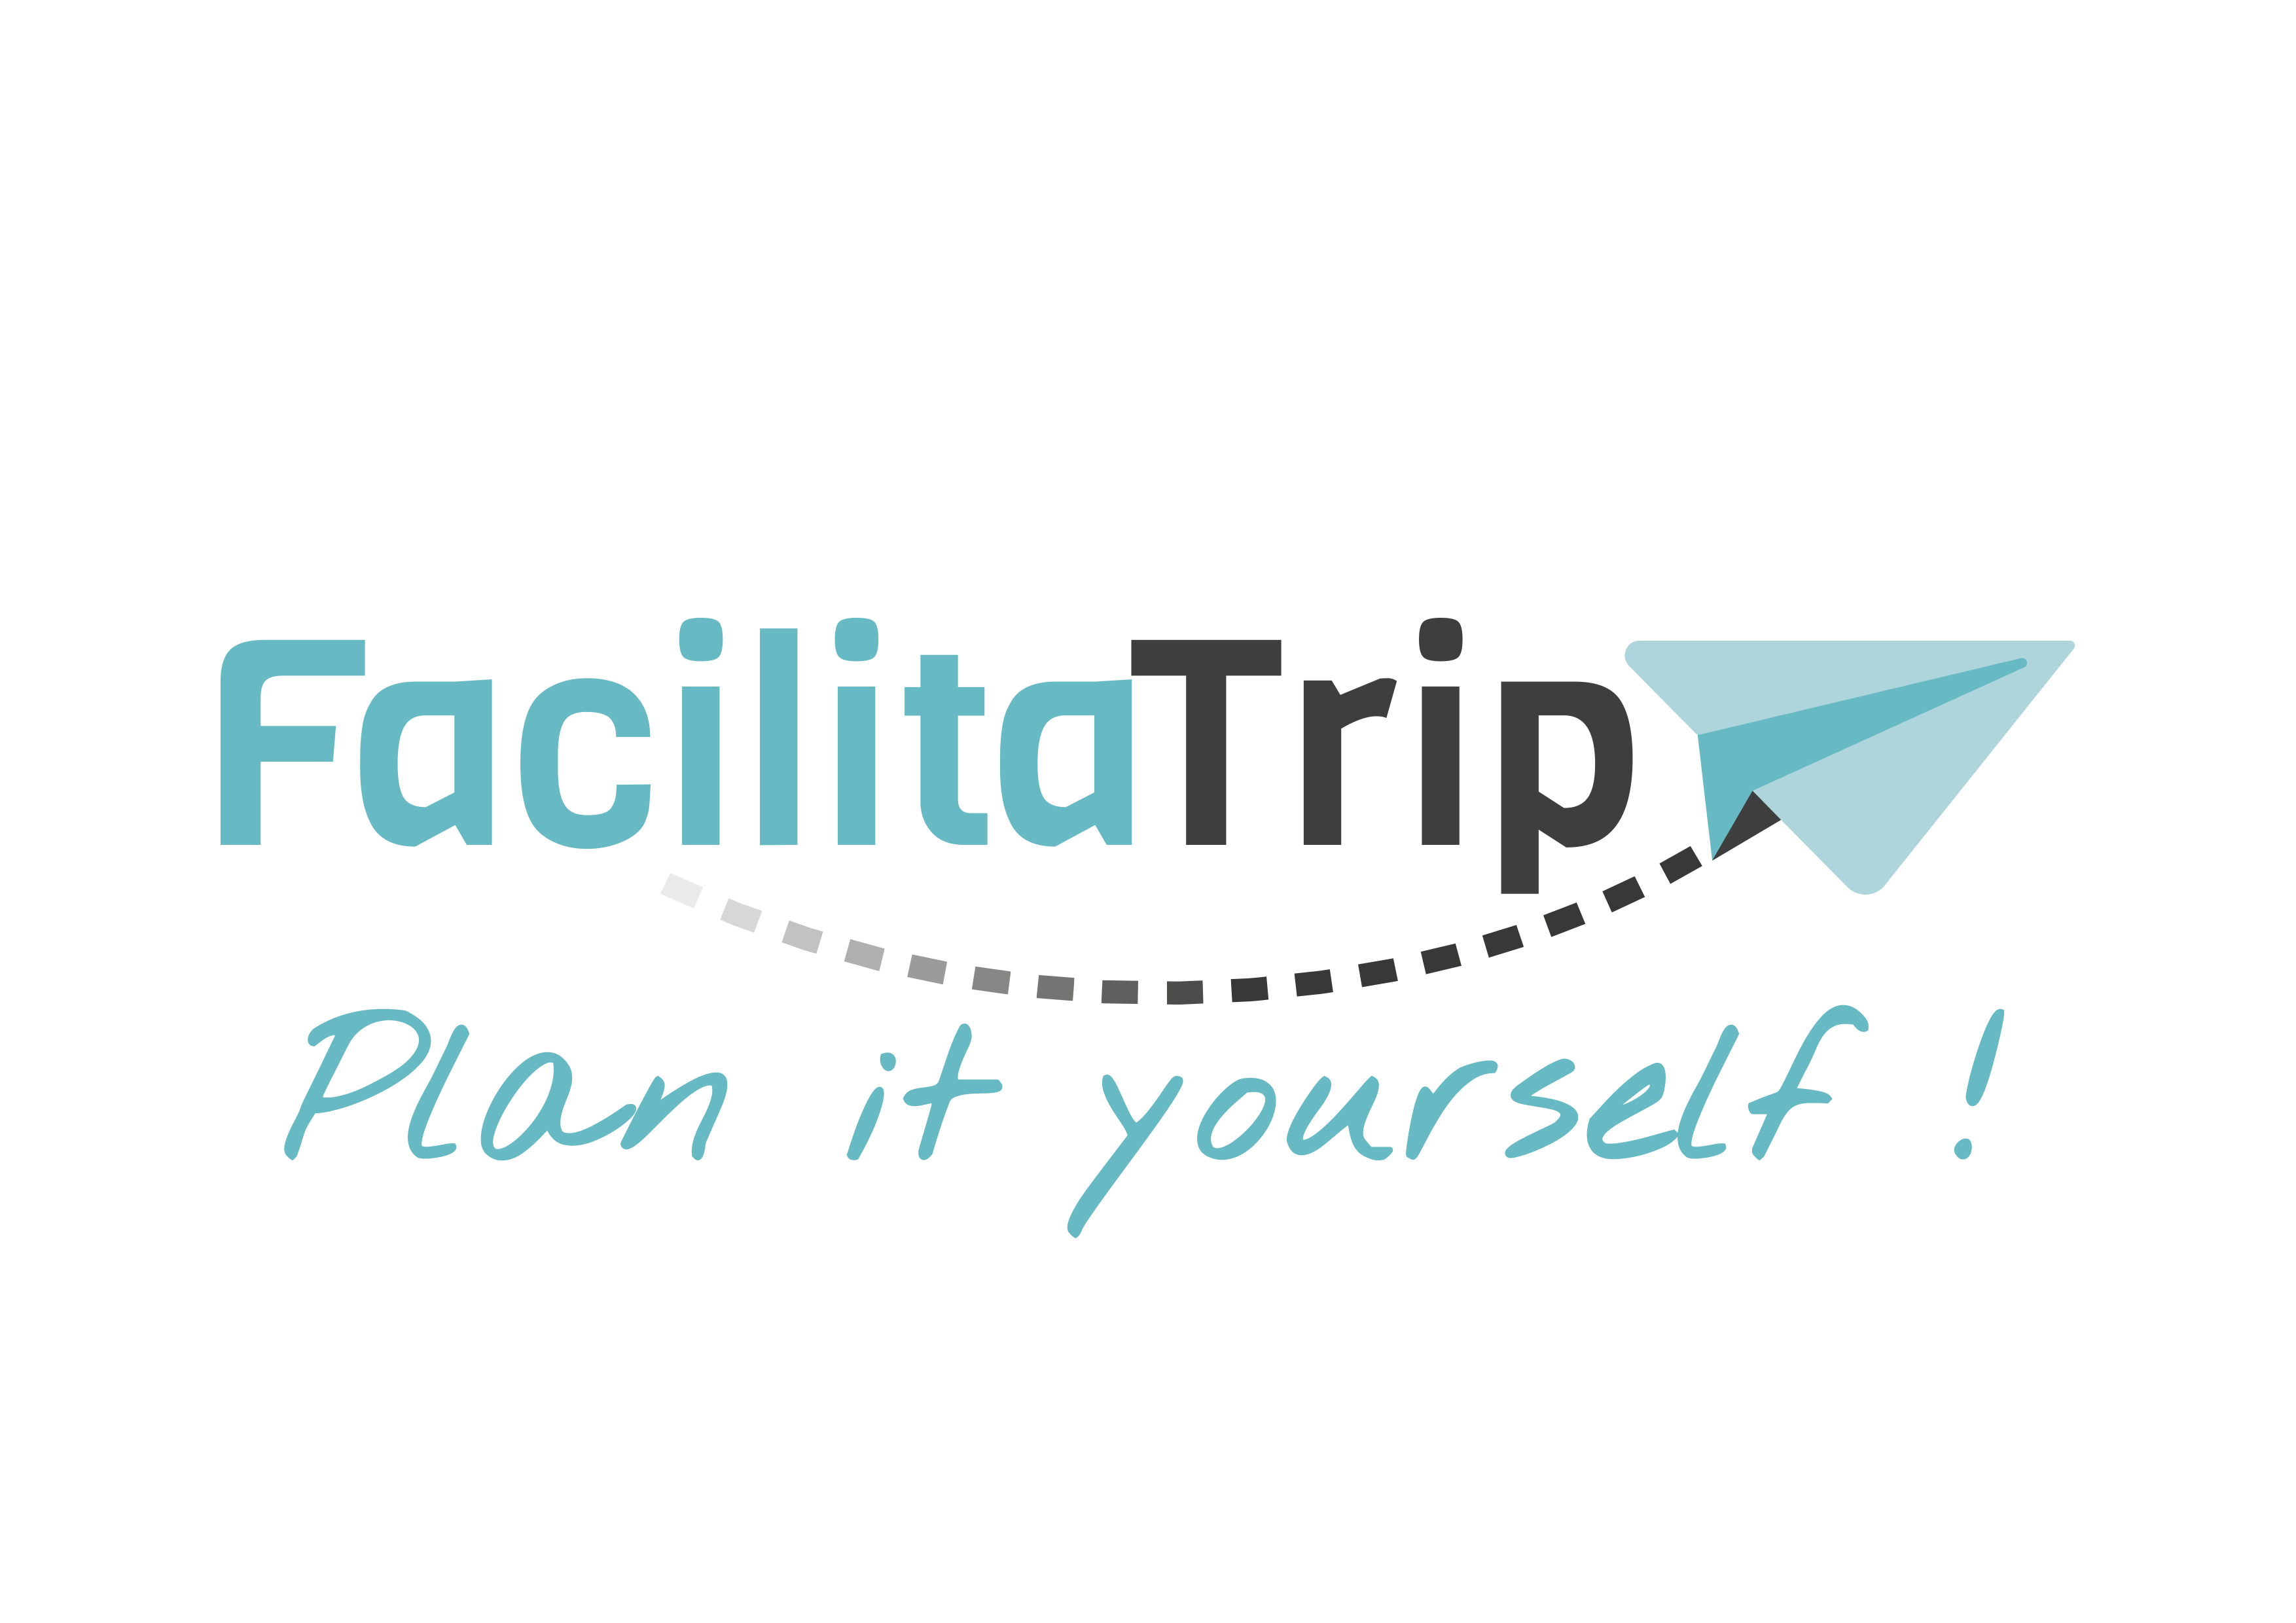 FacilitaTrip-logo-et-slogan-turquoise-2